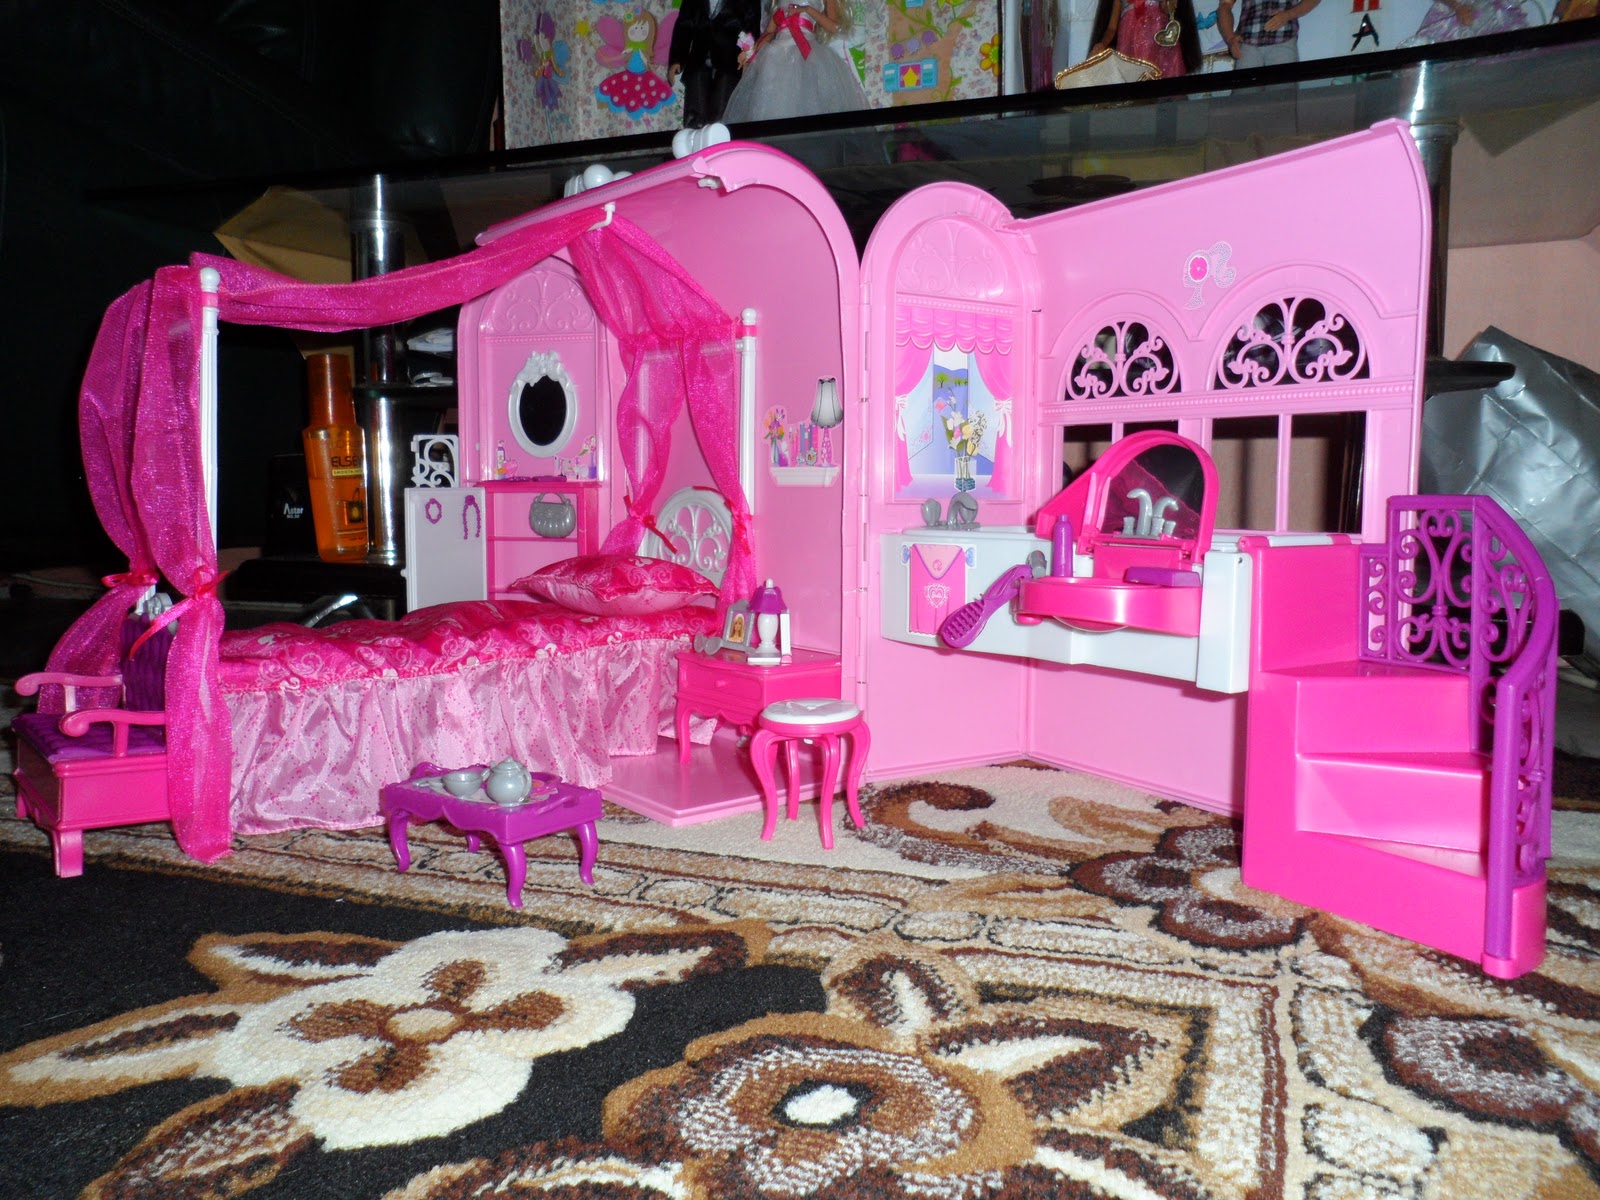 kedai wallpaper murah,rosa,giocattolo,barbie,casa delle bambole,bambola